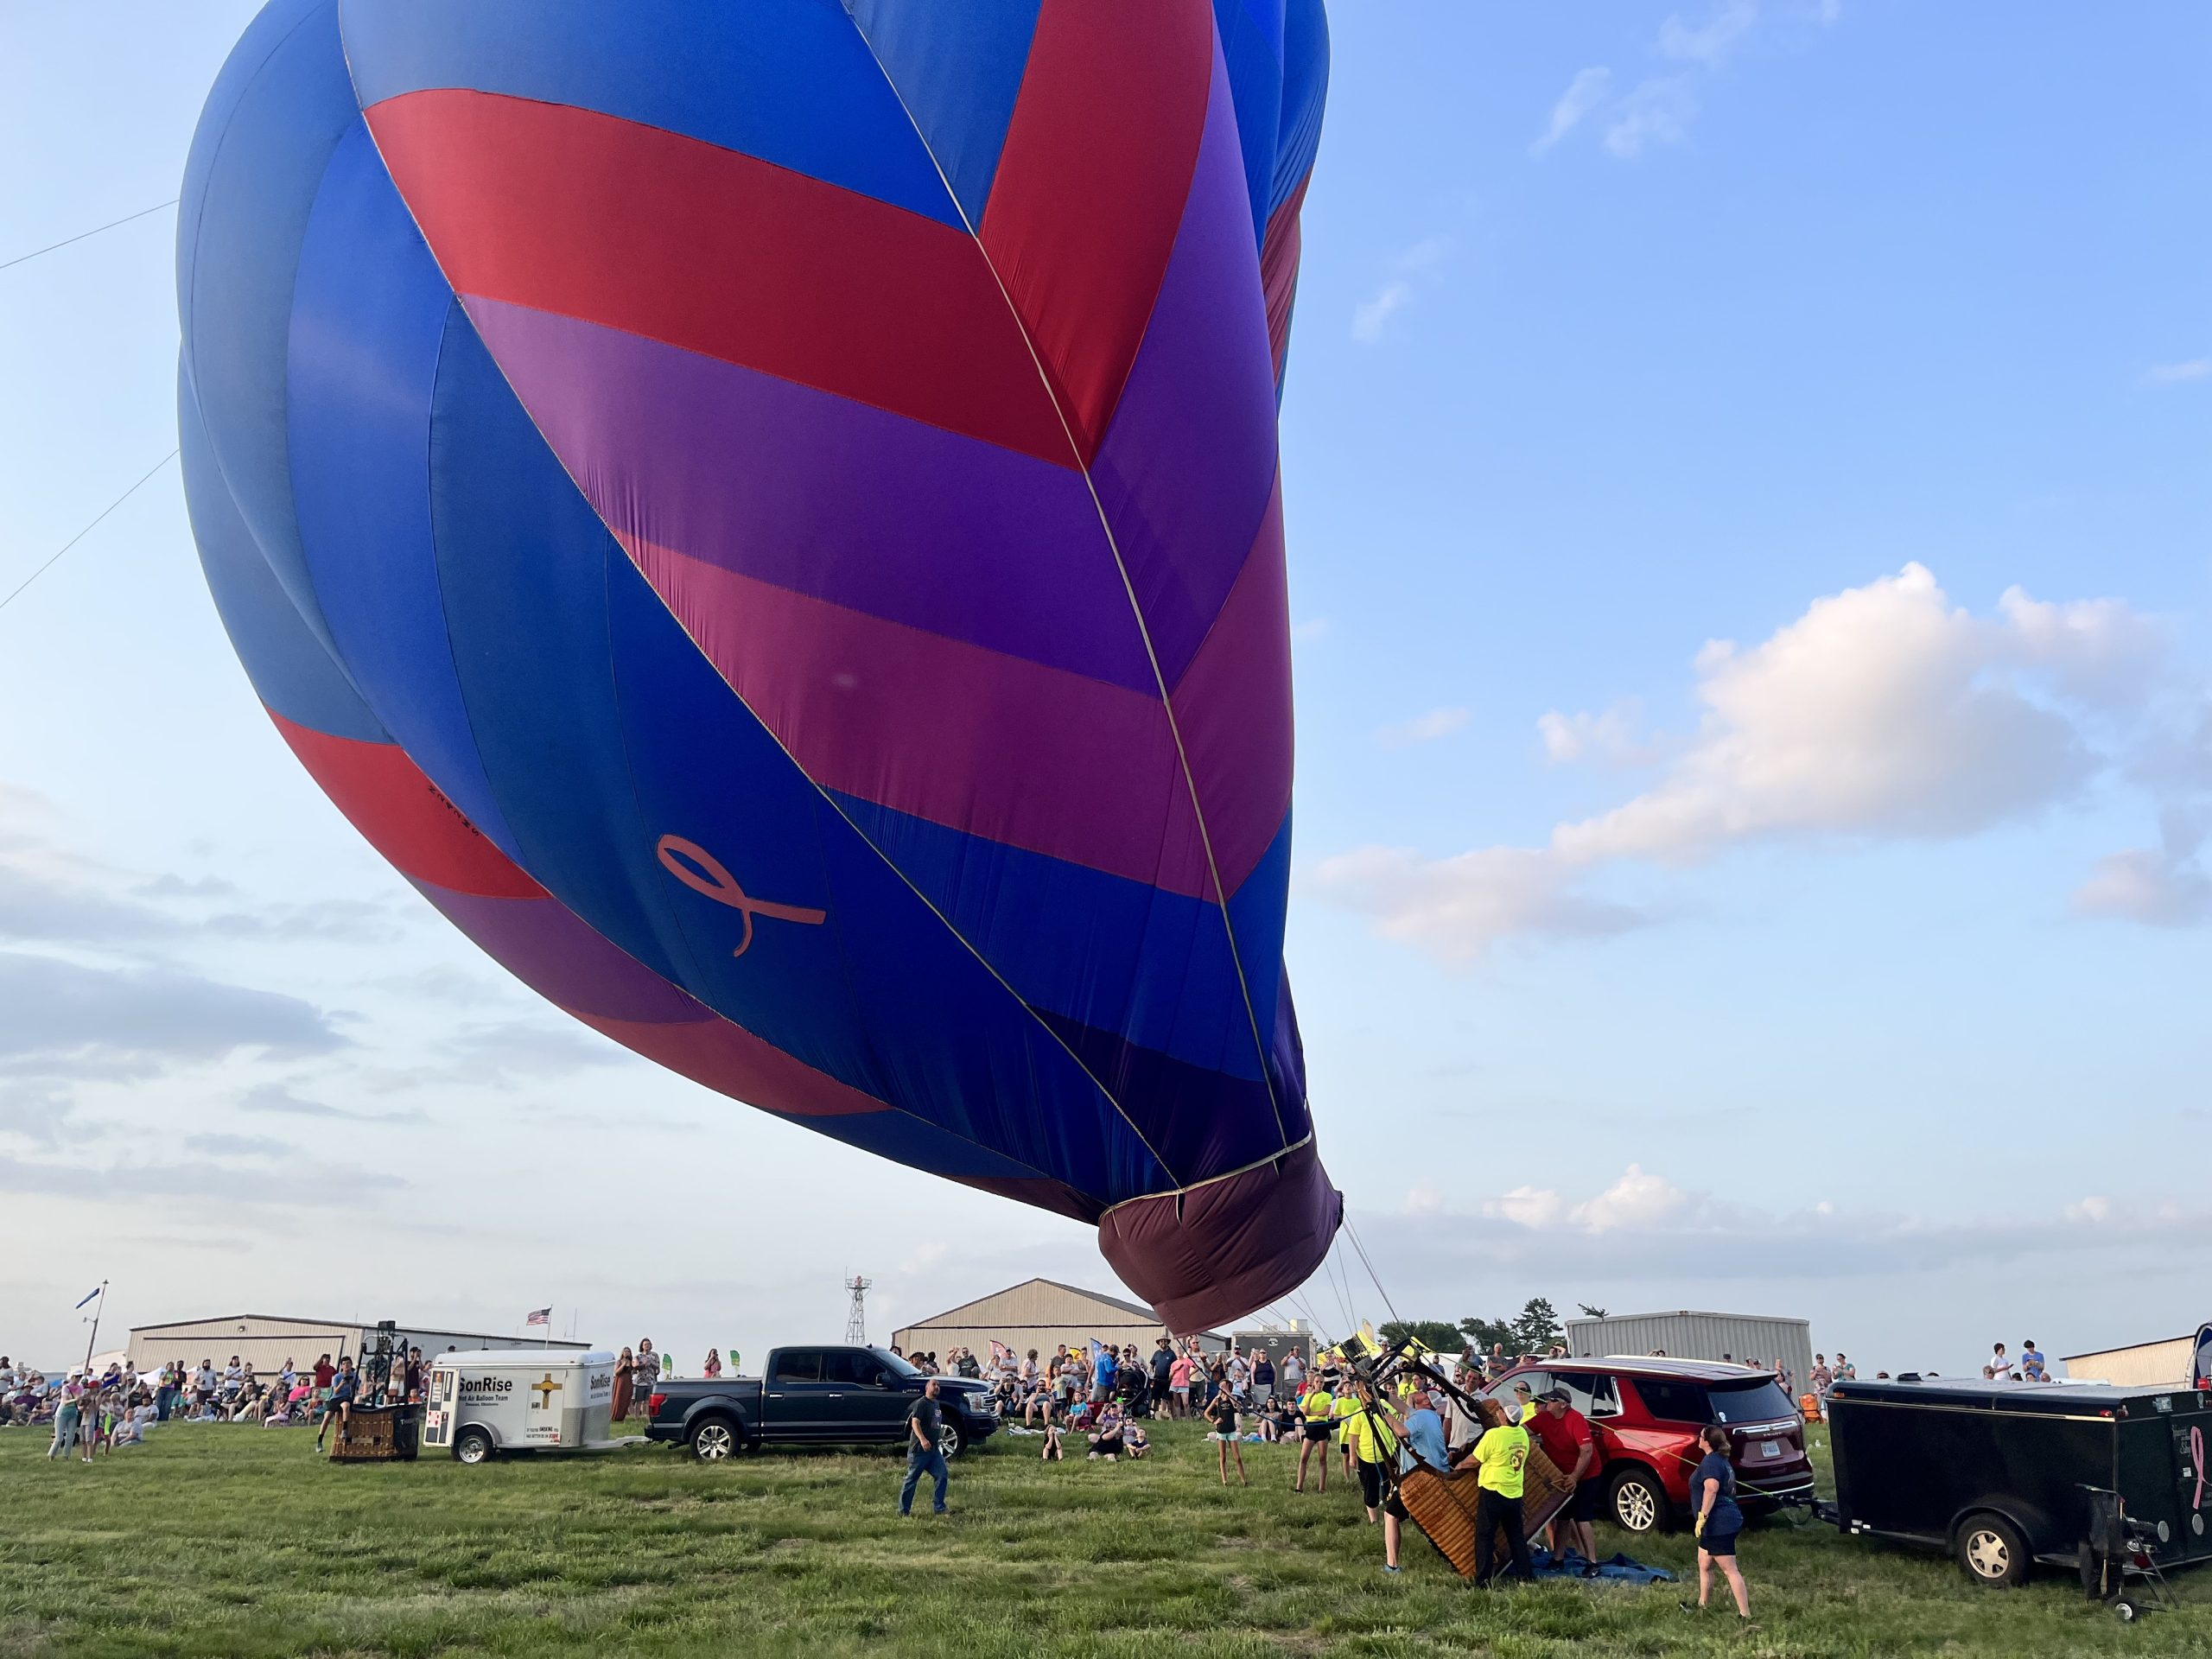 Falls City to hold annual Hot Air Balloon Festival